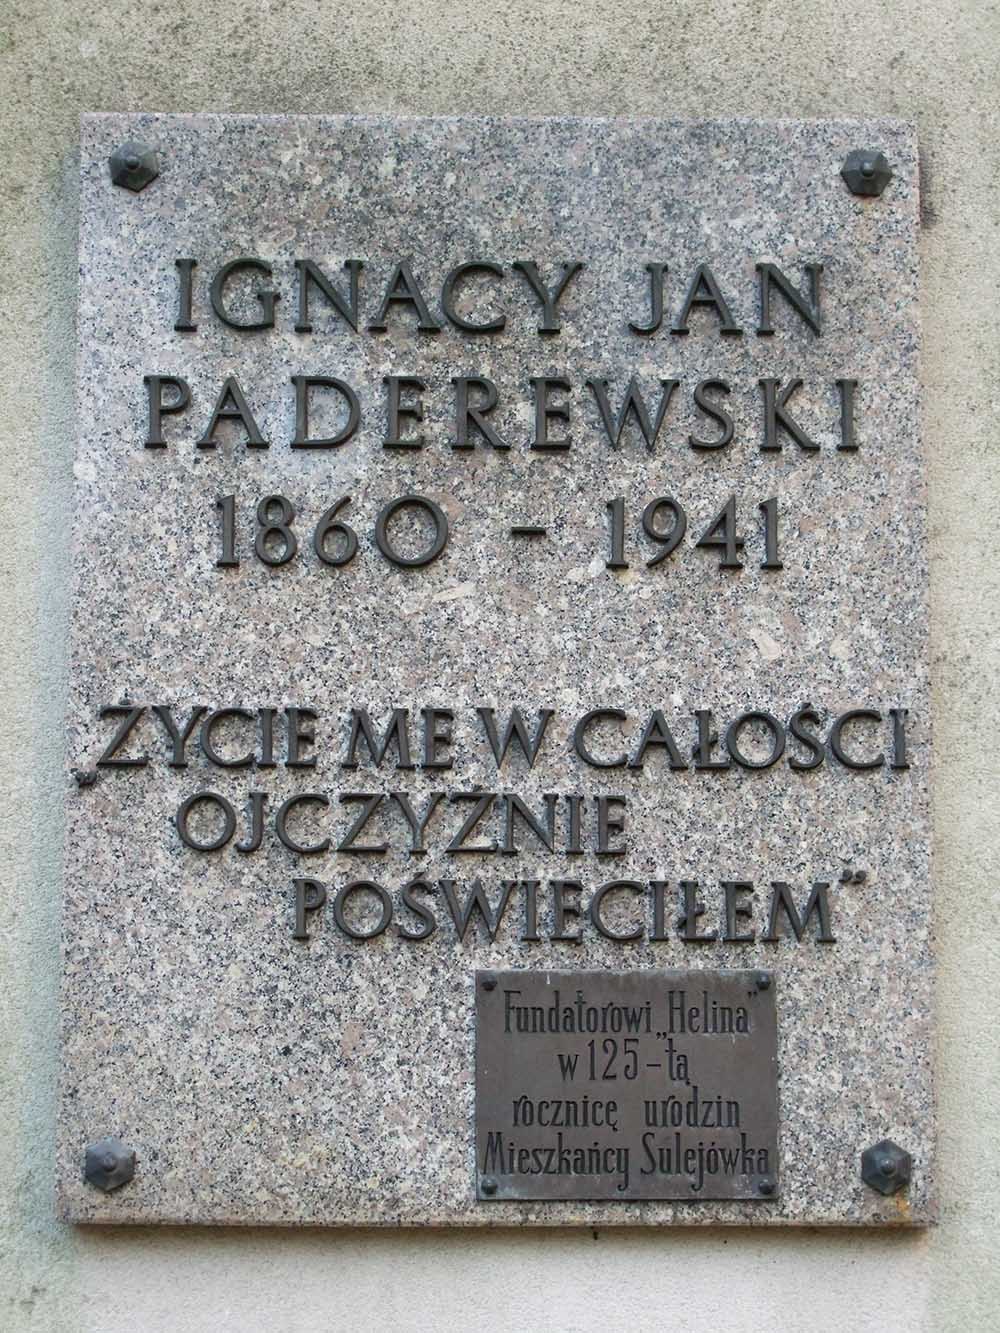 Former Villa Ignacy Paderewski